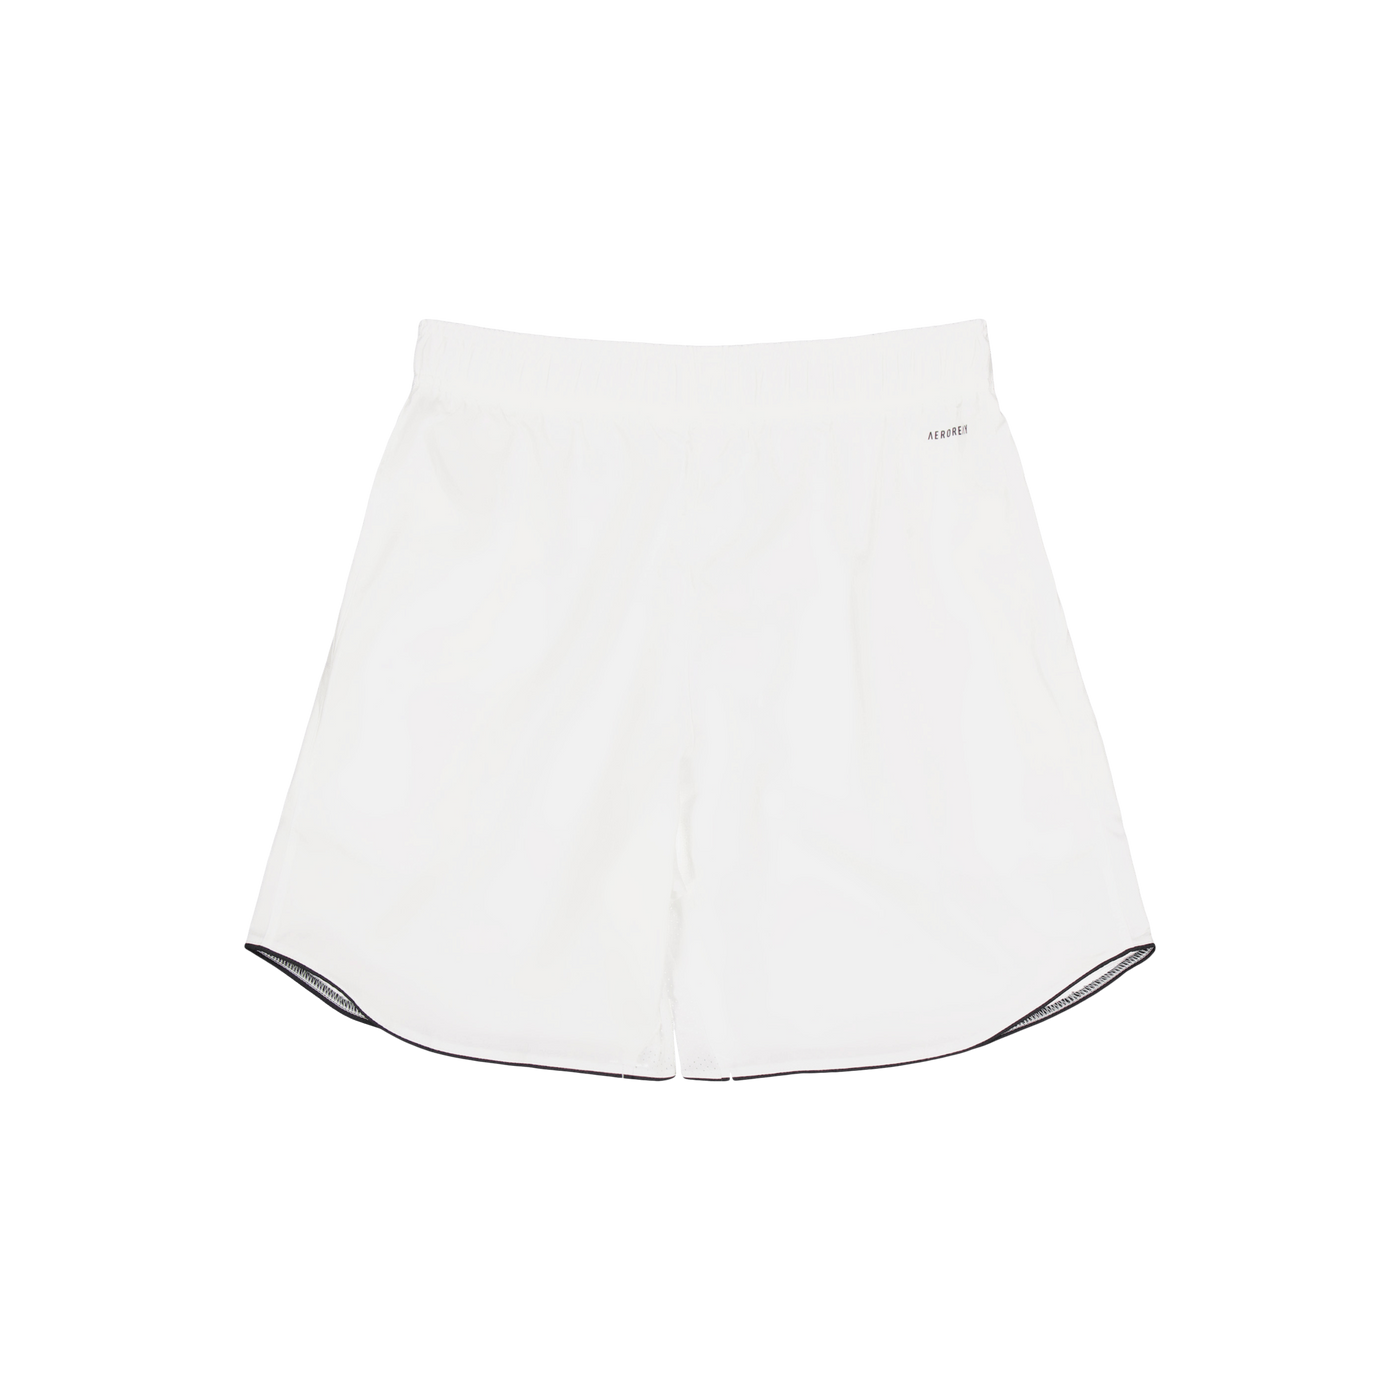 Club Shorts White